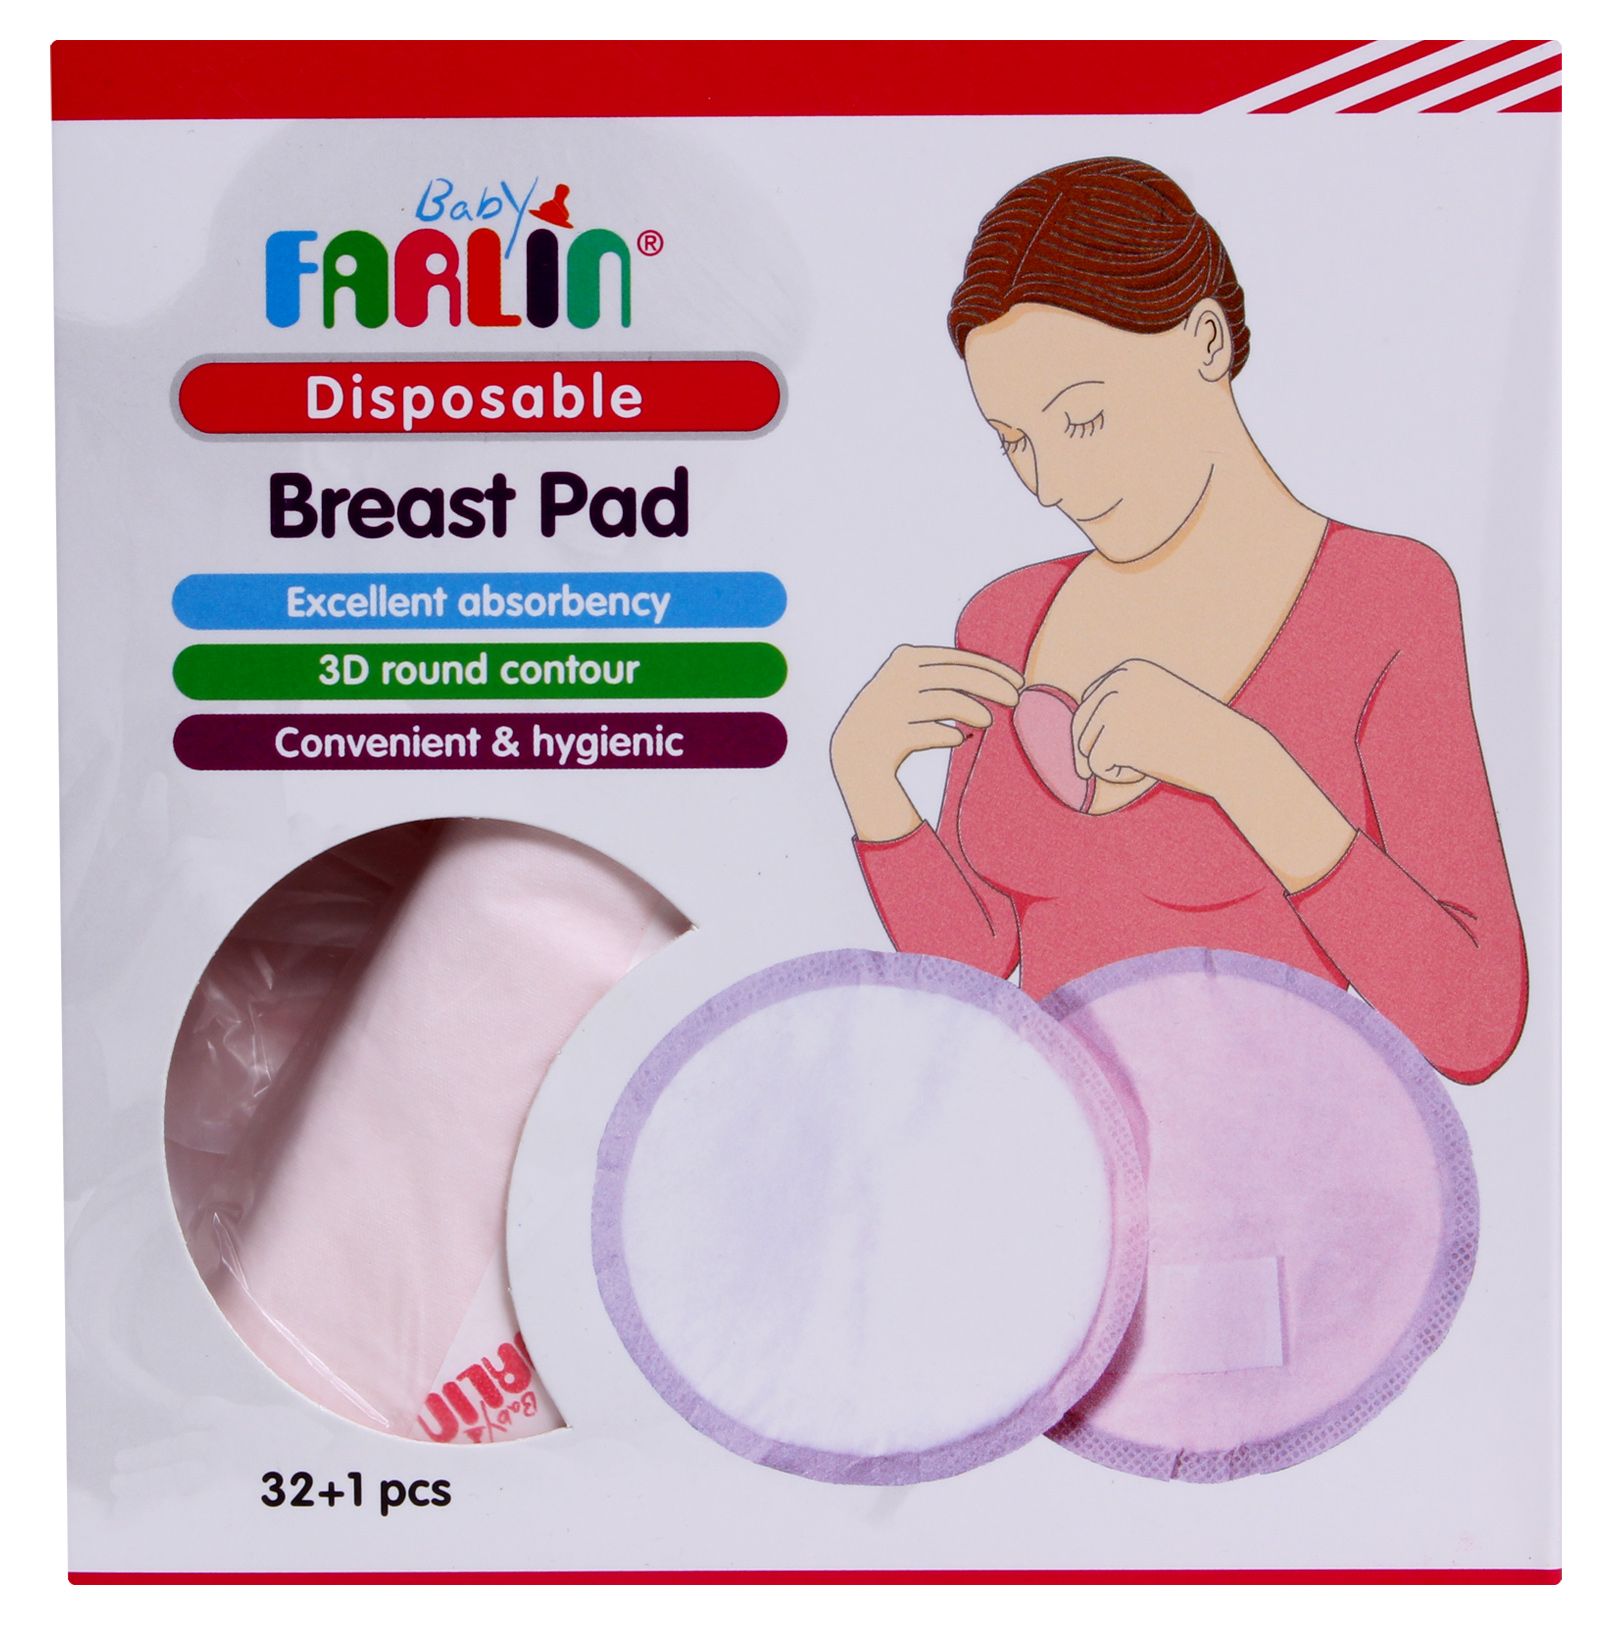 Farlin Disposable Breast Pad